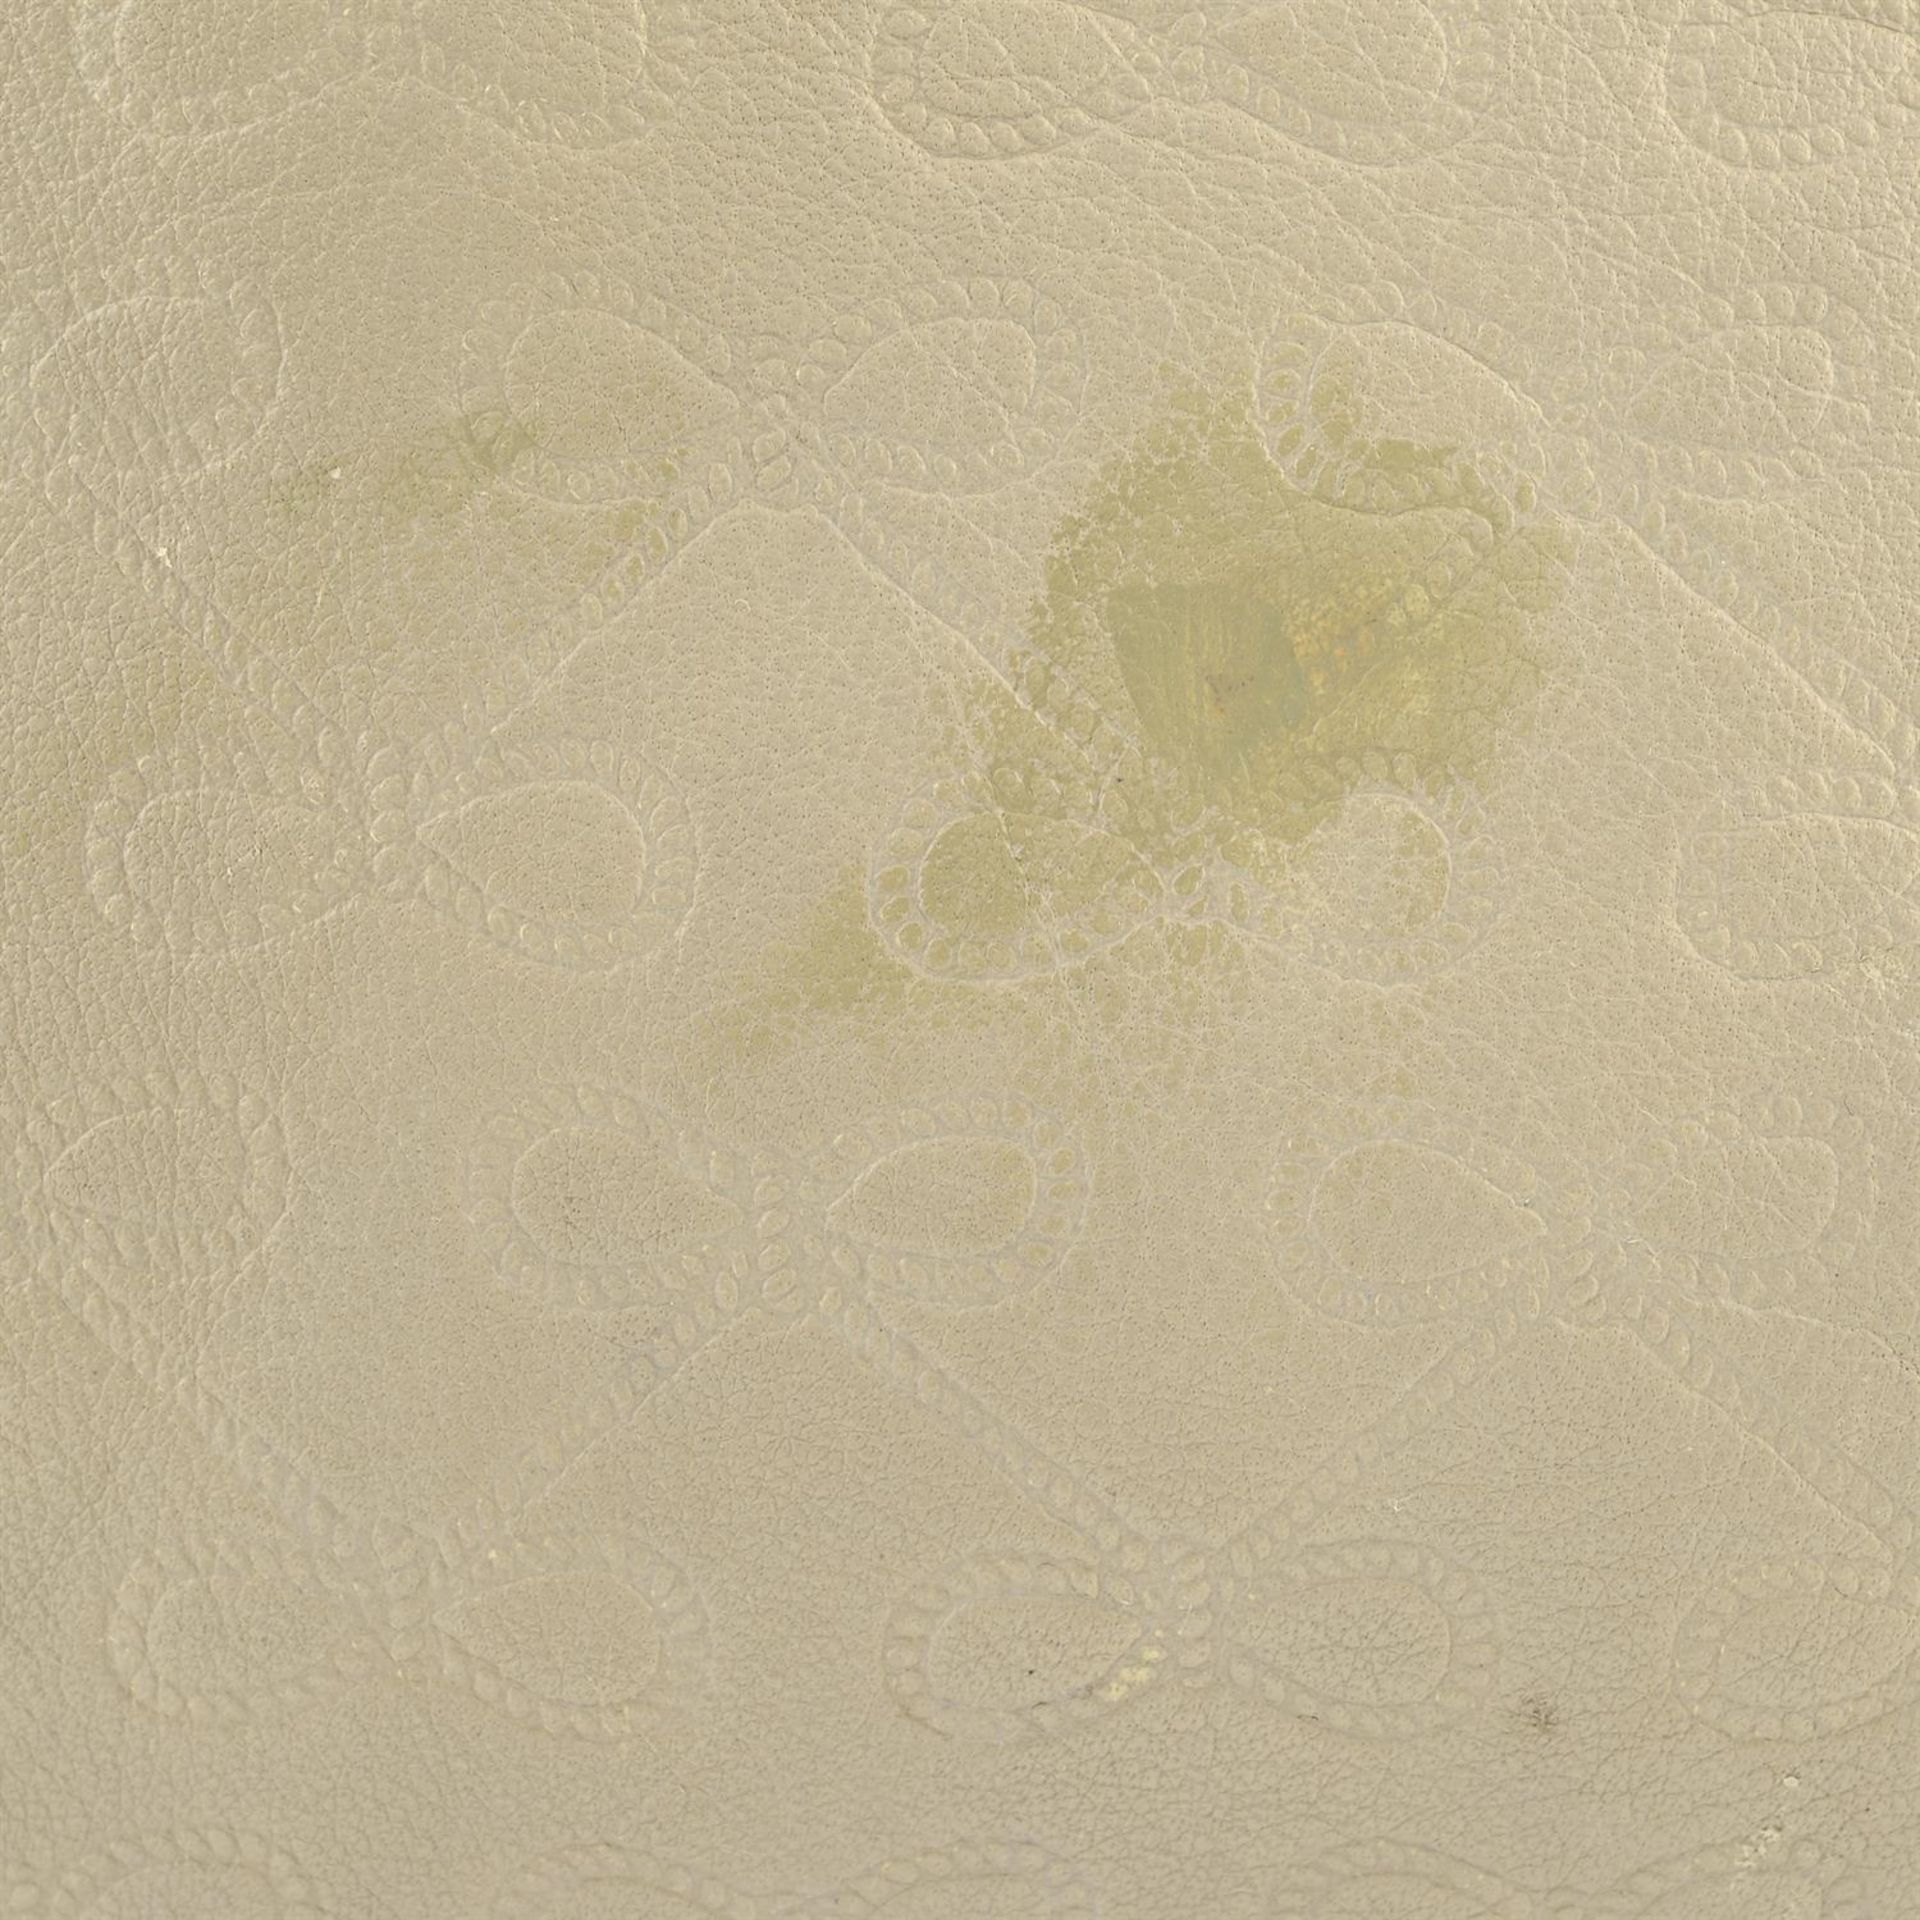 ANYA HINDMARCH - a beige embossed leather shoulder bag. - Image 5 of 5